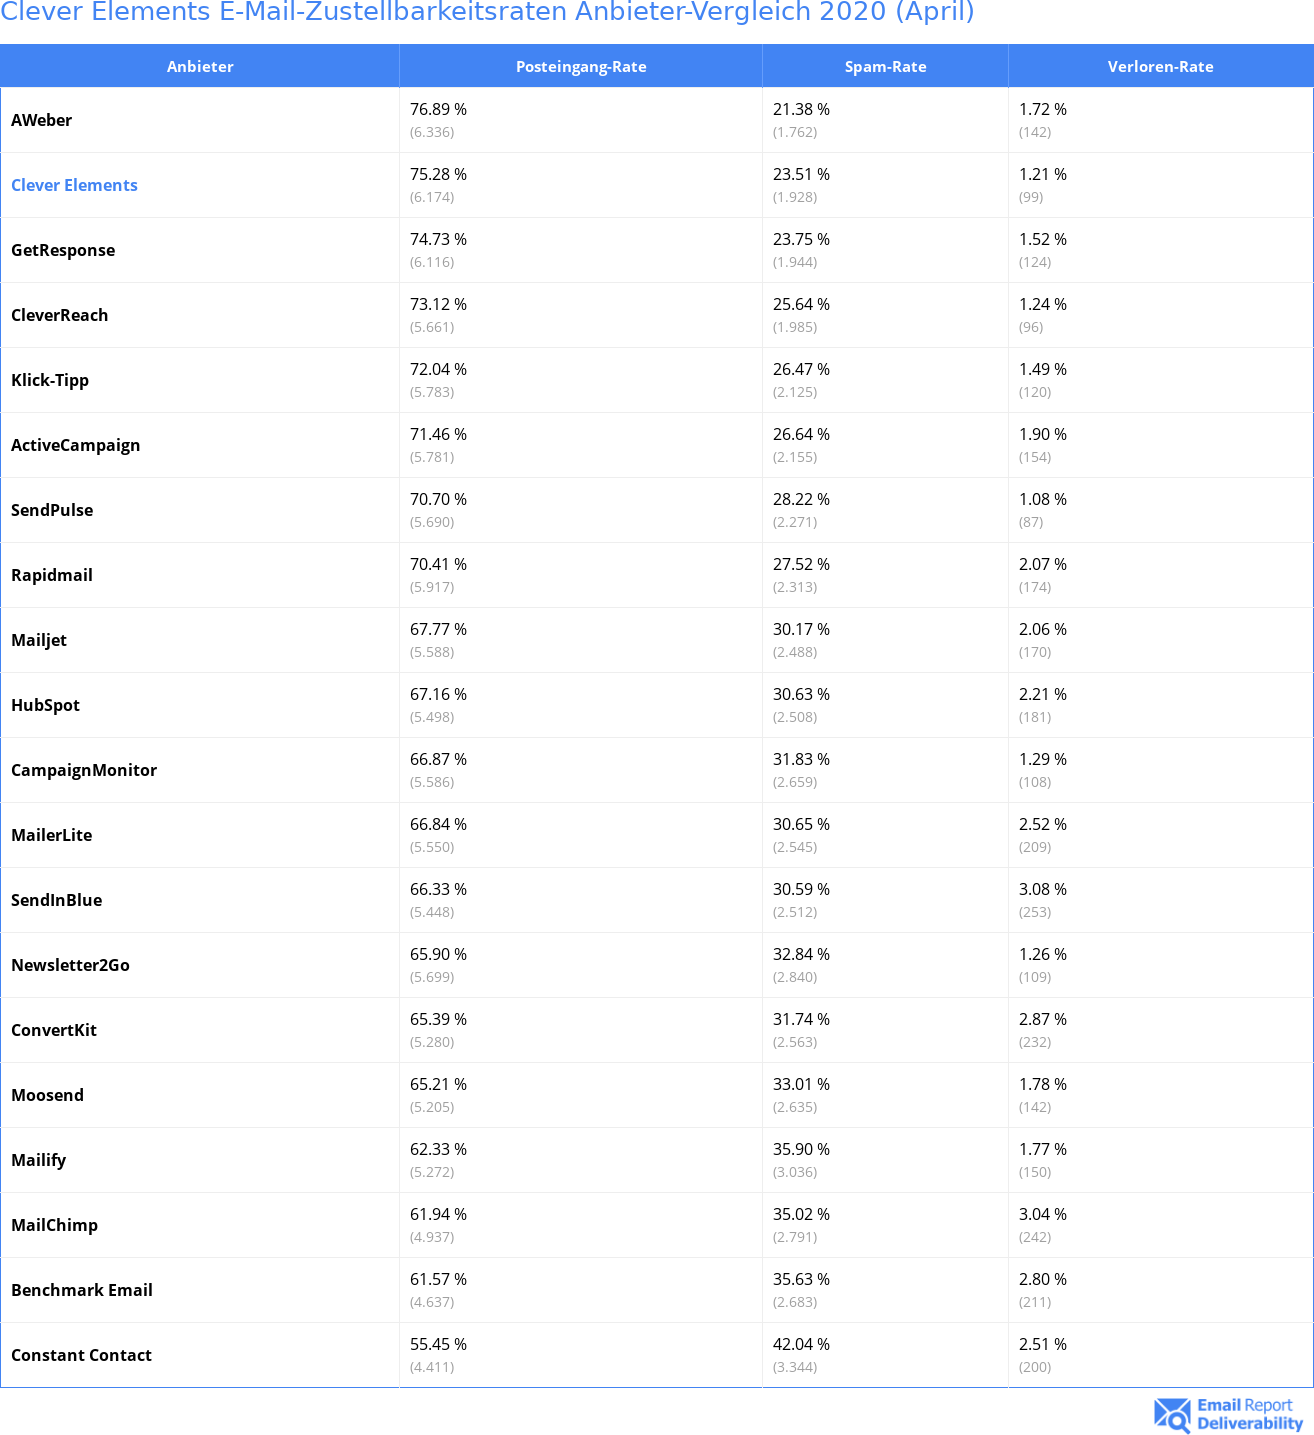 Clever Elements E-Mail-Zustellbarkeitsraten Anbieter-Vergleich 2020 (April)